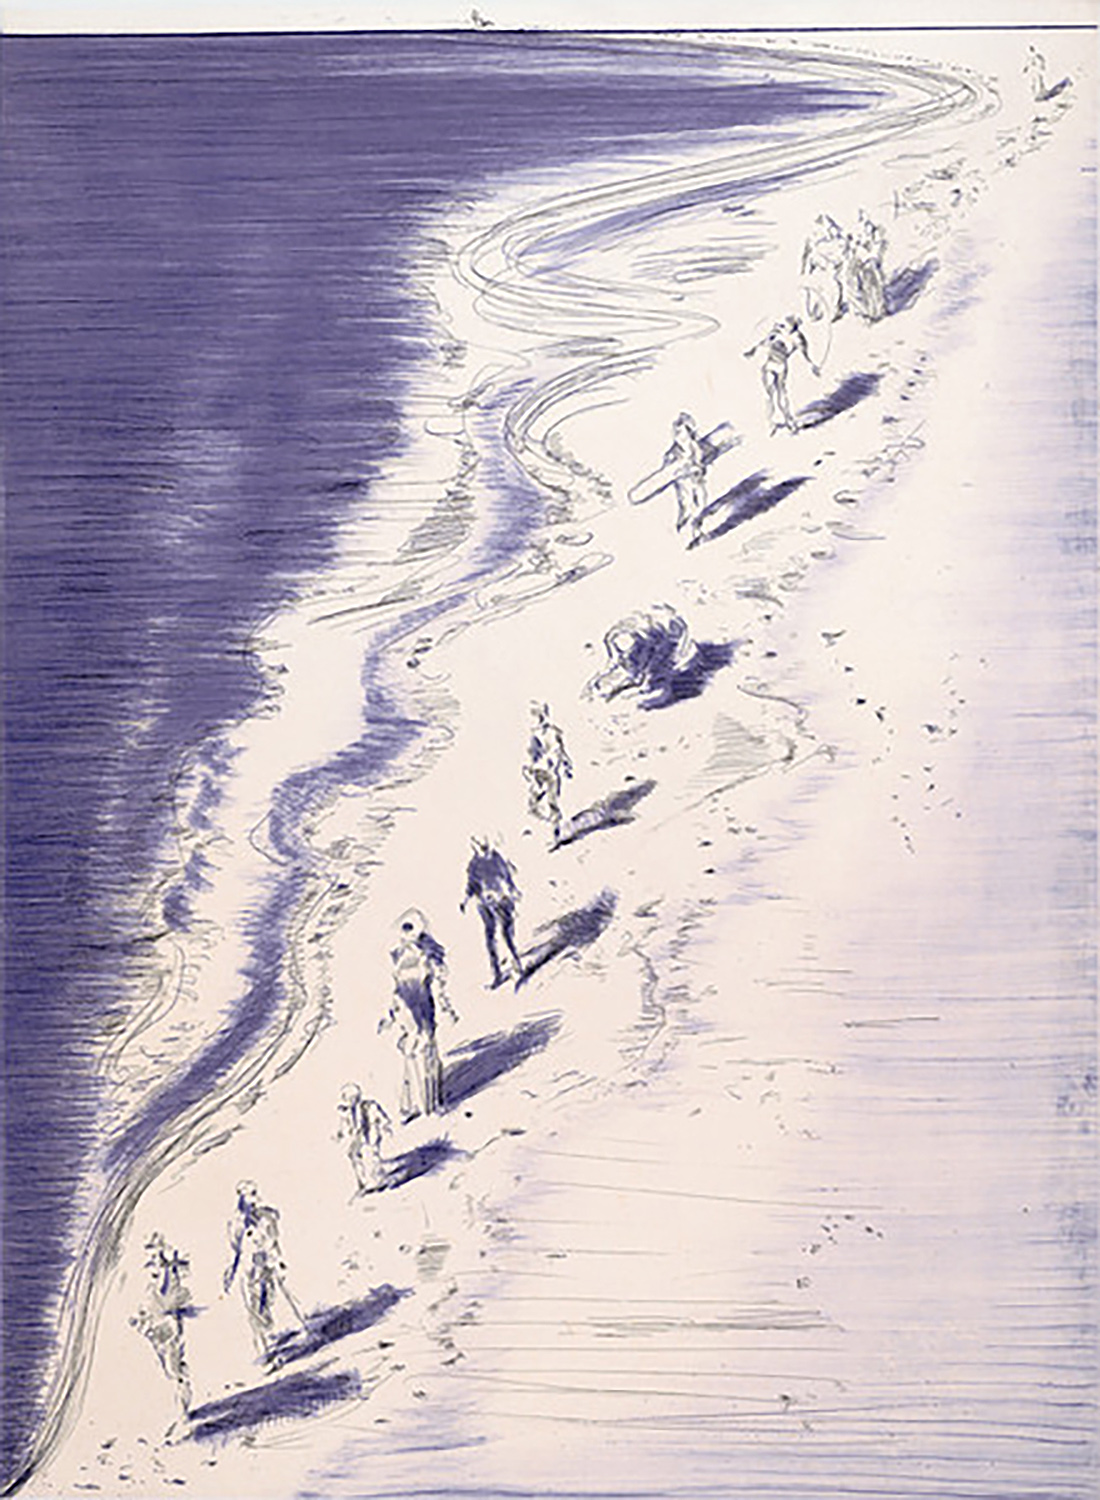 Beach side print by Wayne Thiebaud